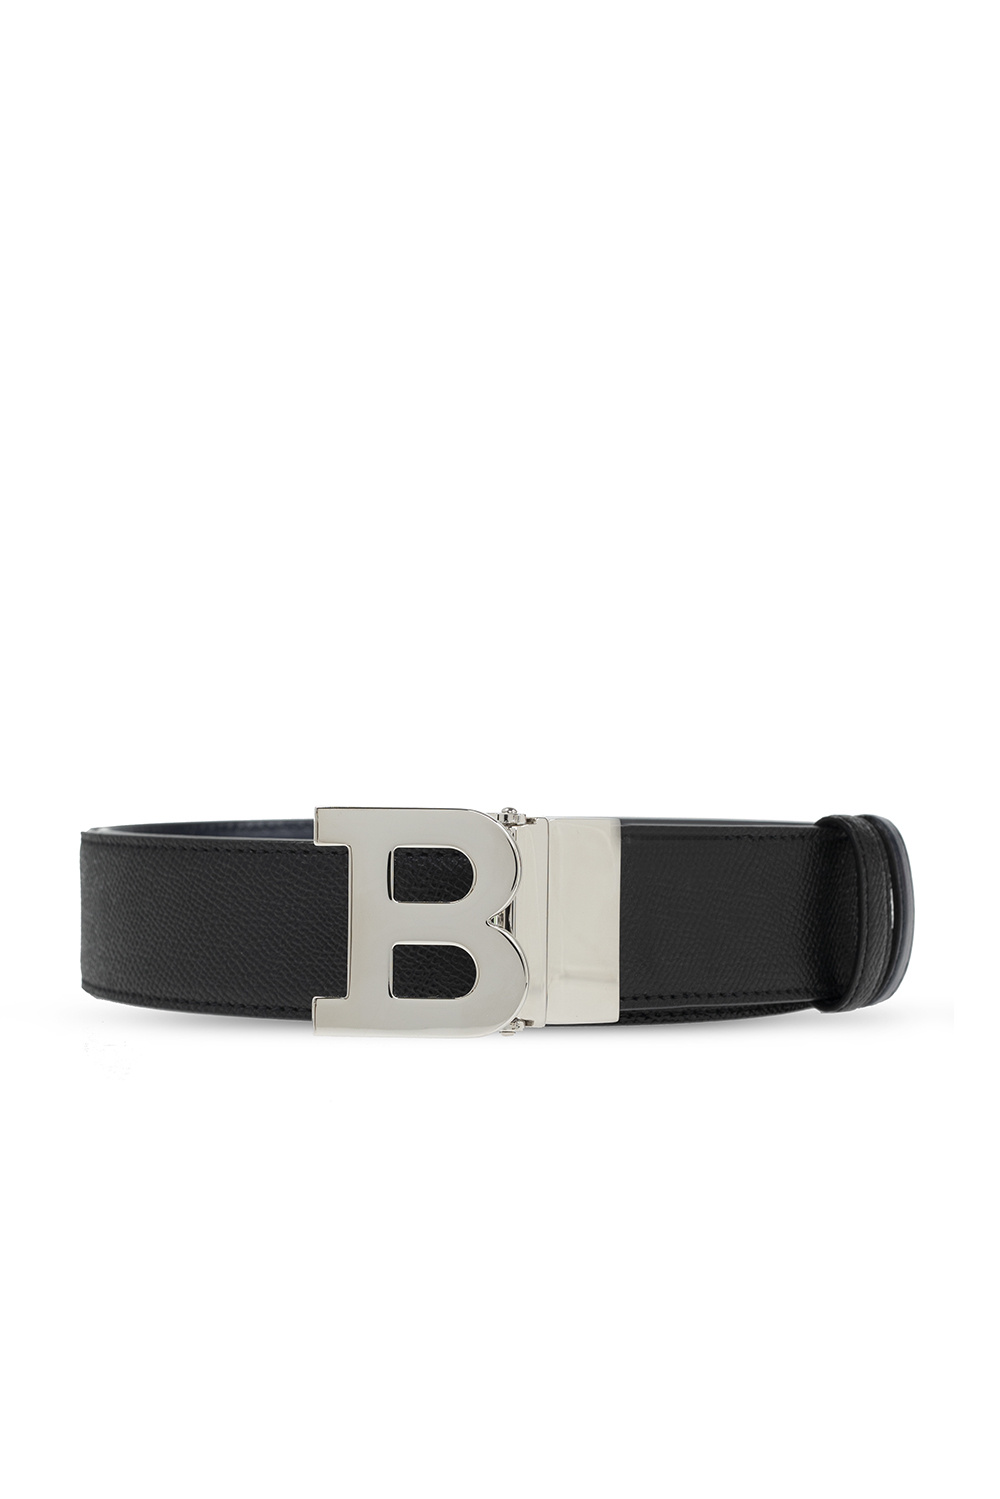 Bally Belt with logo | Men's Accessories | Vitkac